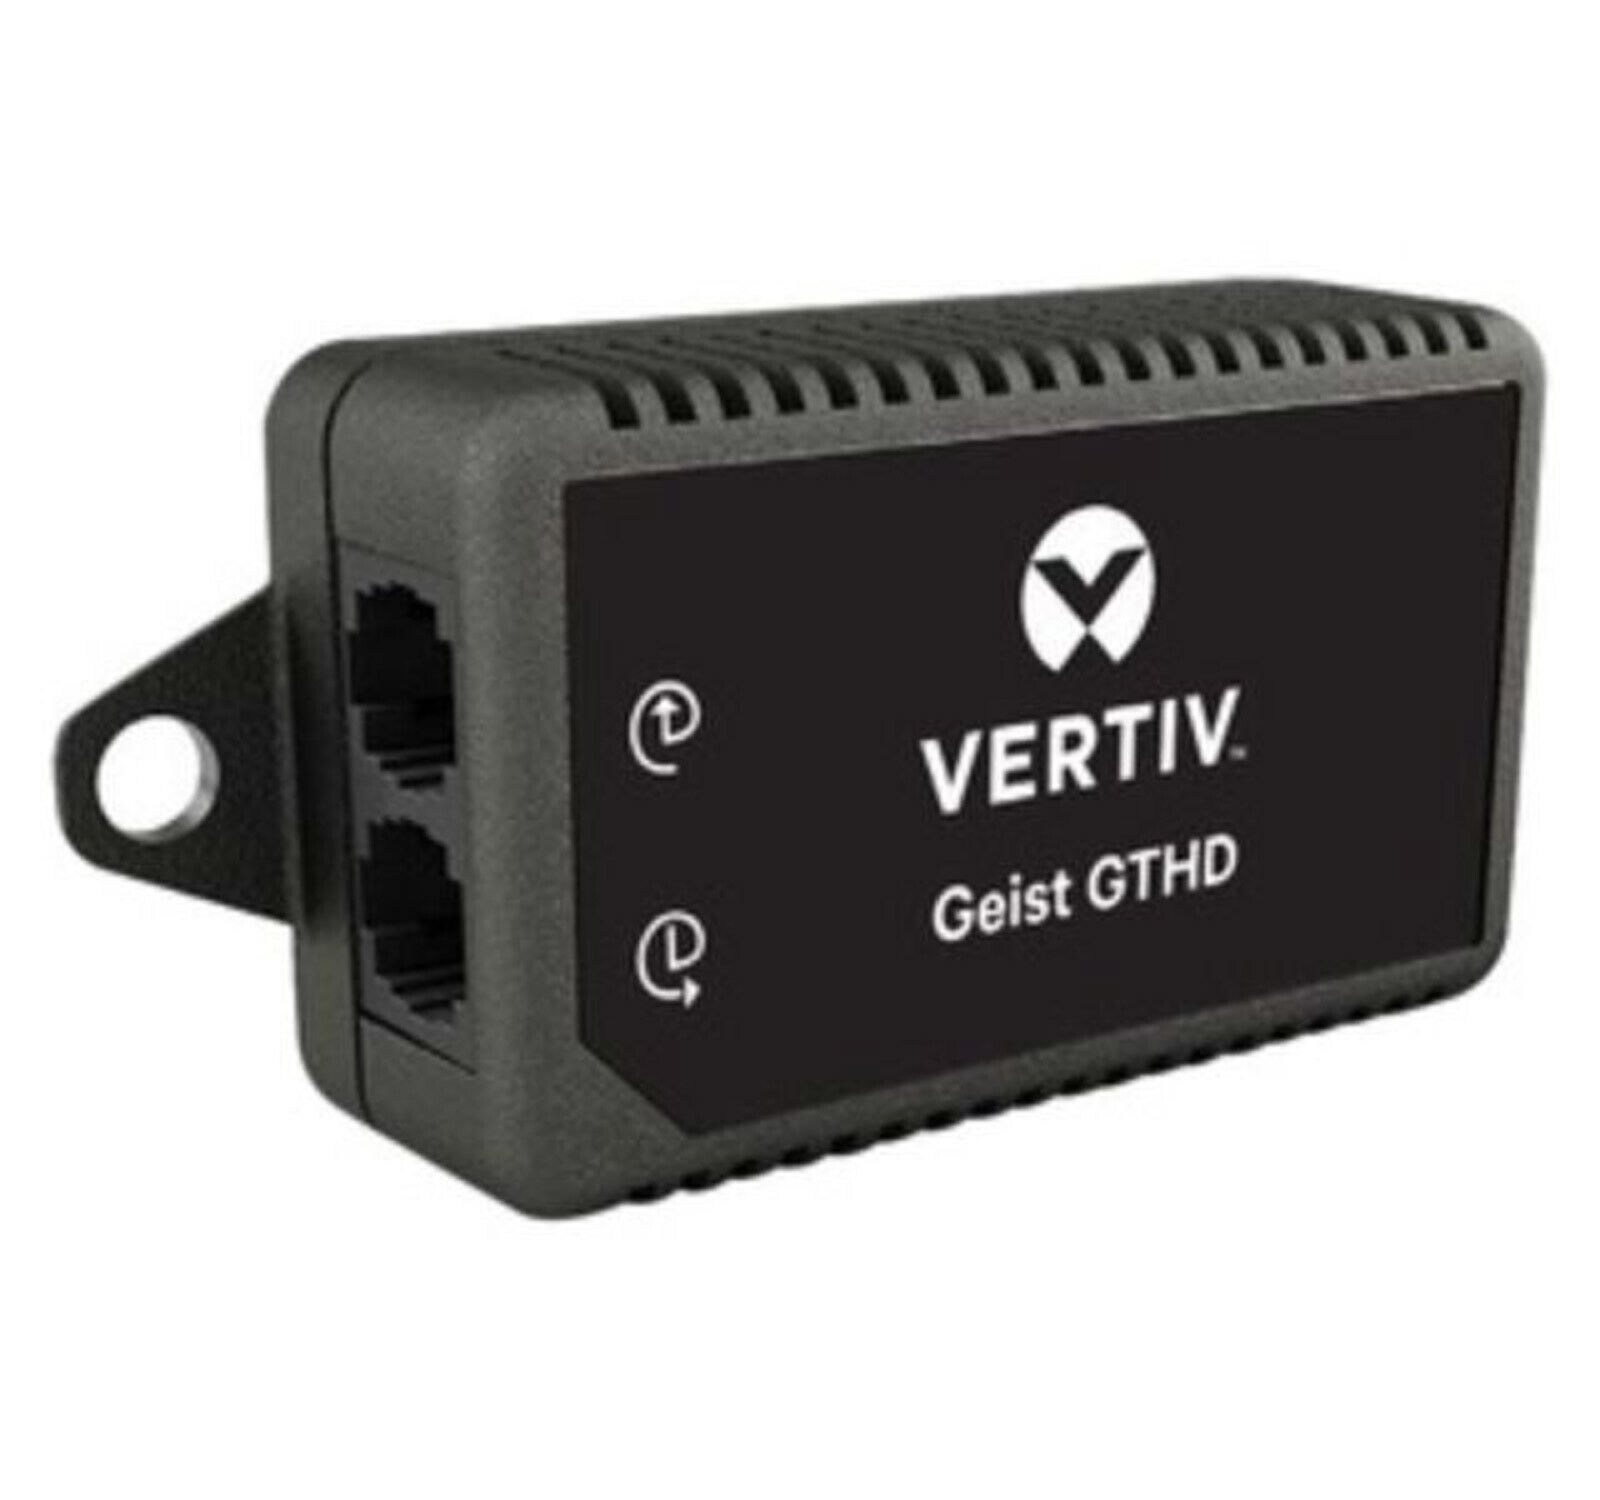 Vertiv Geist GTHD Temperature Humidity and Dew point Sensor